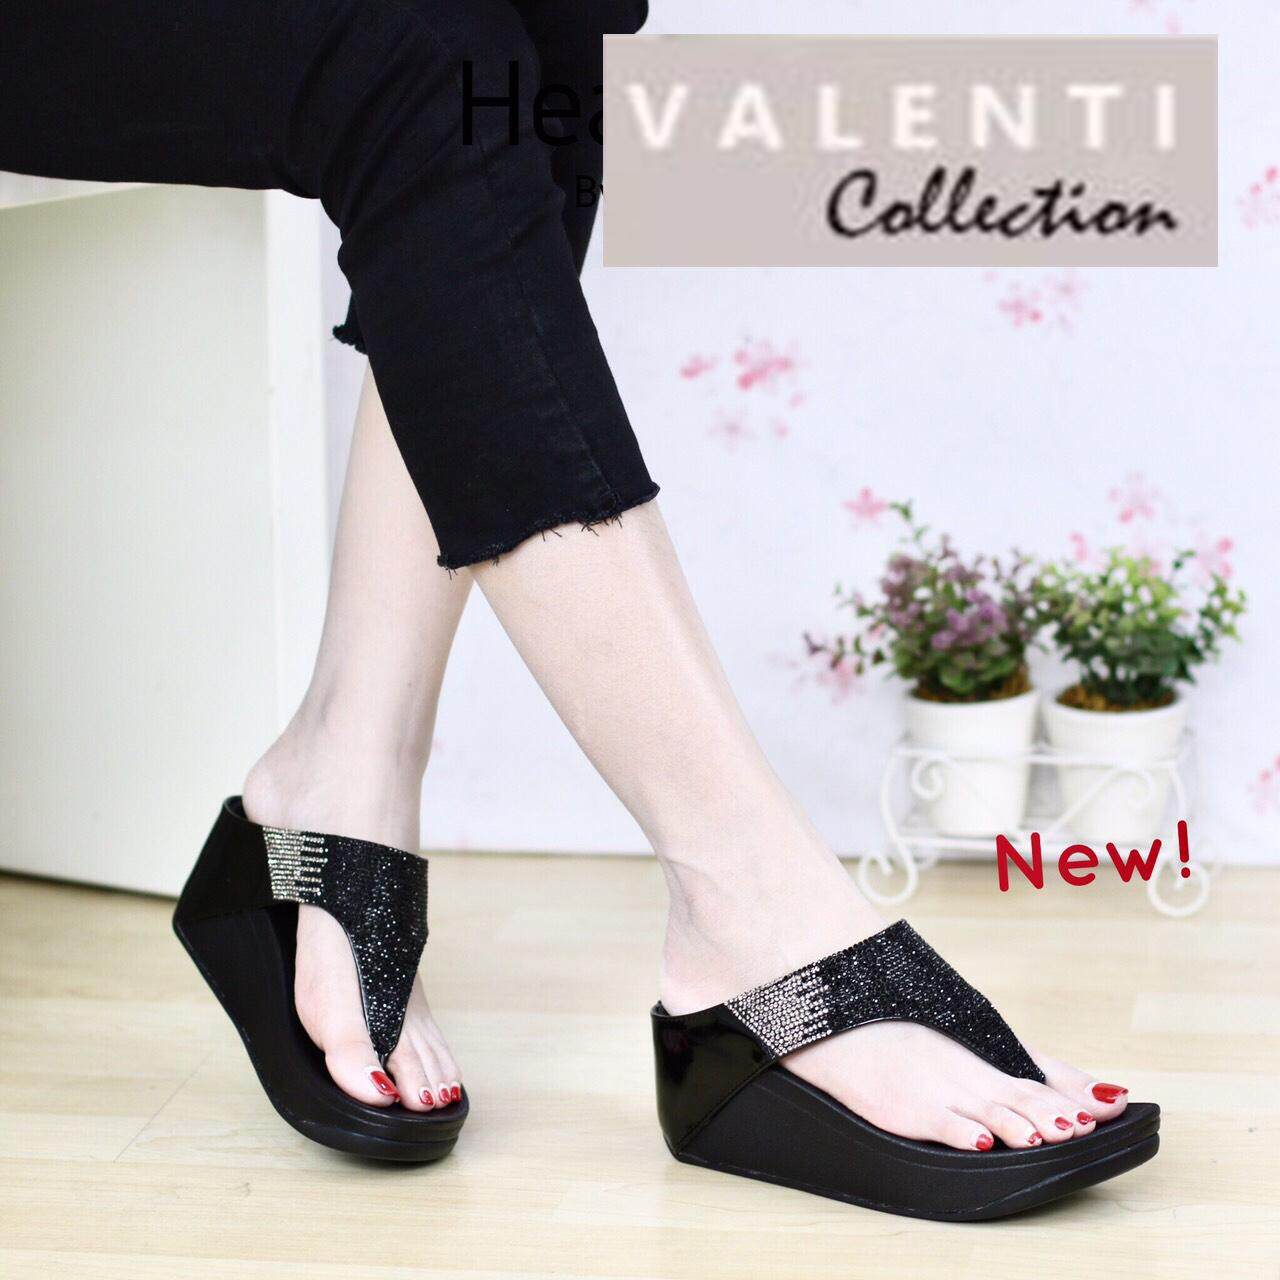 Valenti Collection รองเท้าเพื่อสุขภาพ Health & massage Therapy flipflop นุ่มมาก เบา ใส่สบาย รุ่น F1287 Black (สีดำ)